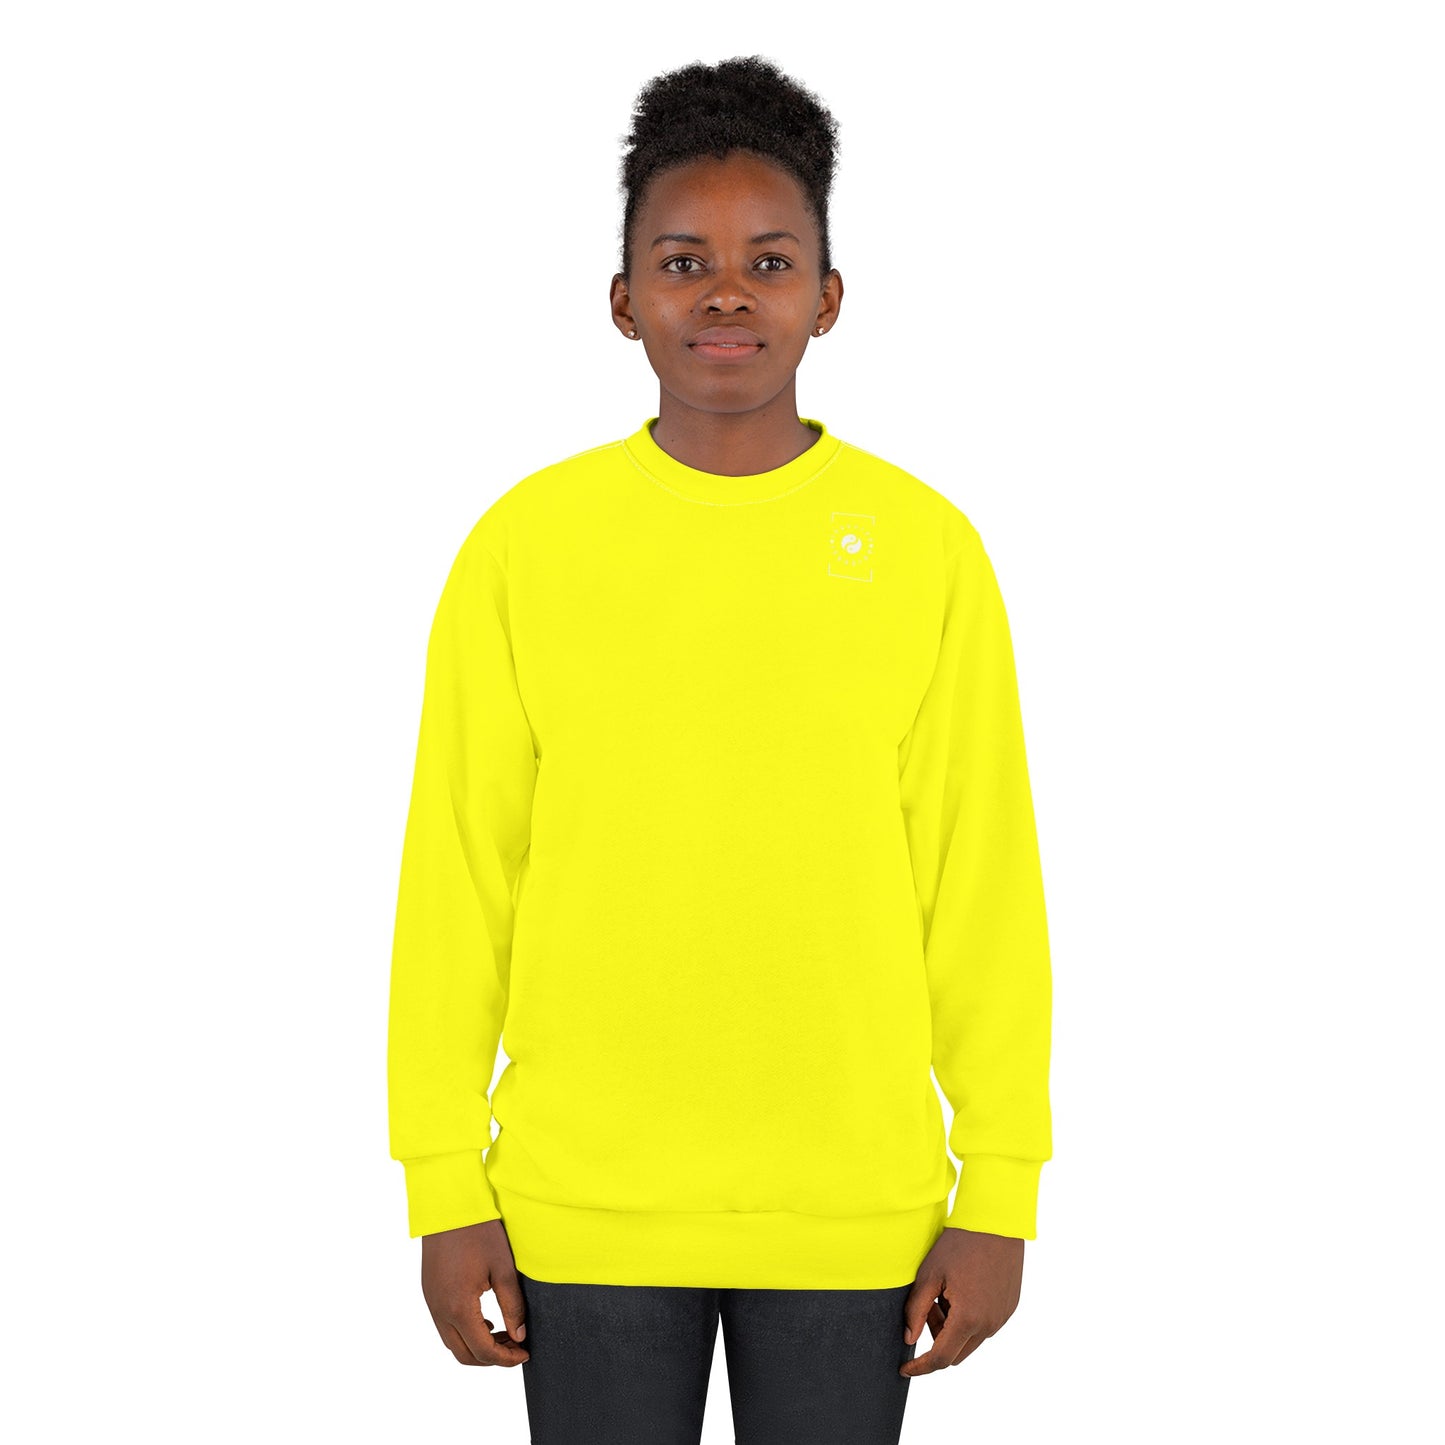 Neon Yellow FFFF00 - Unisex Sweatshirt